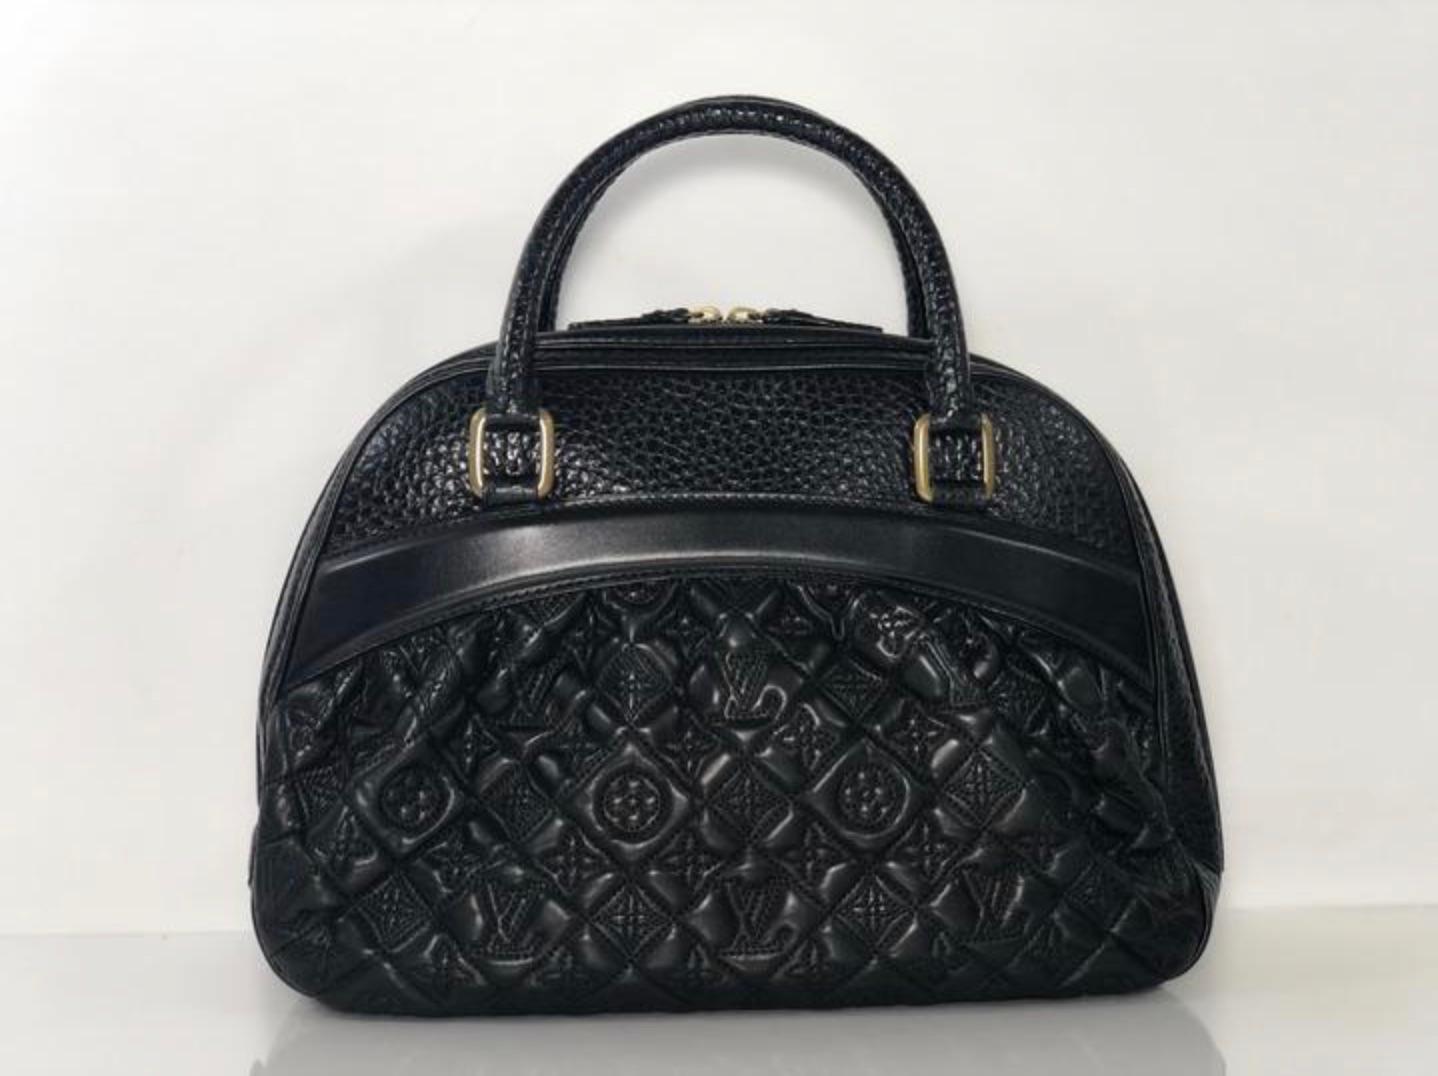 Louis Vuitton Vienna Leather Mizi Satchel Handbag In Excellent Condition For Sale In Saint Charles, IL